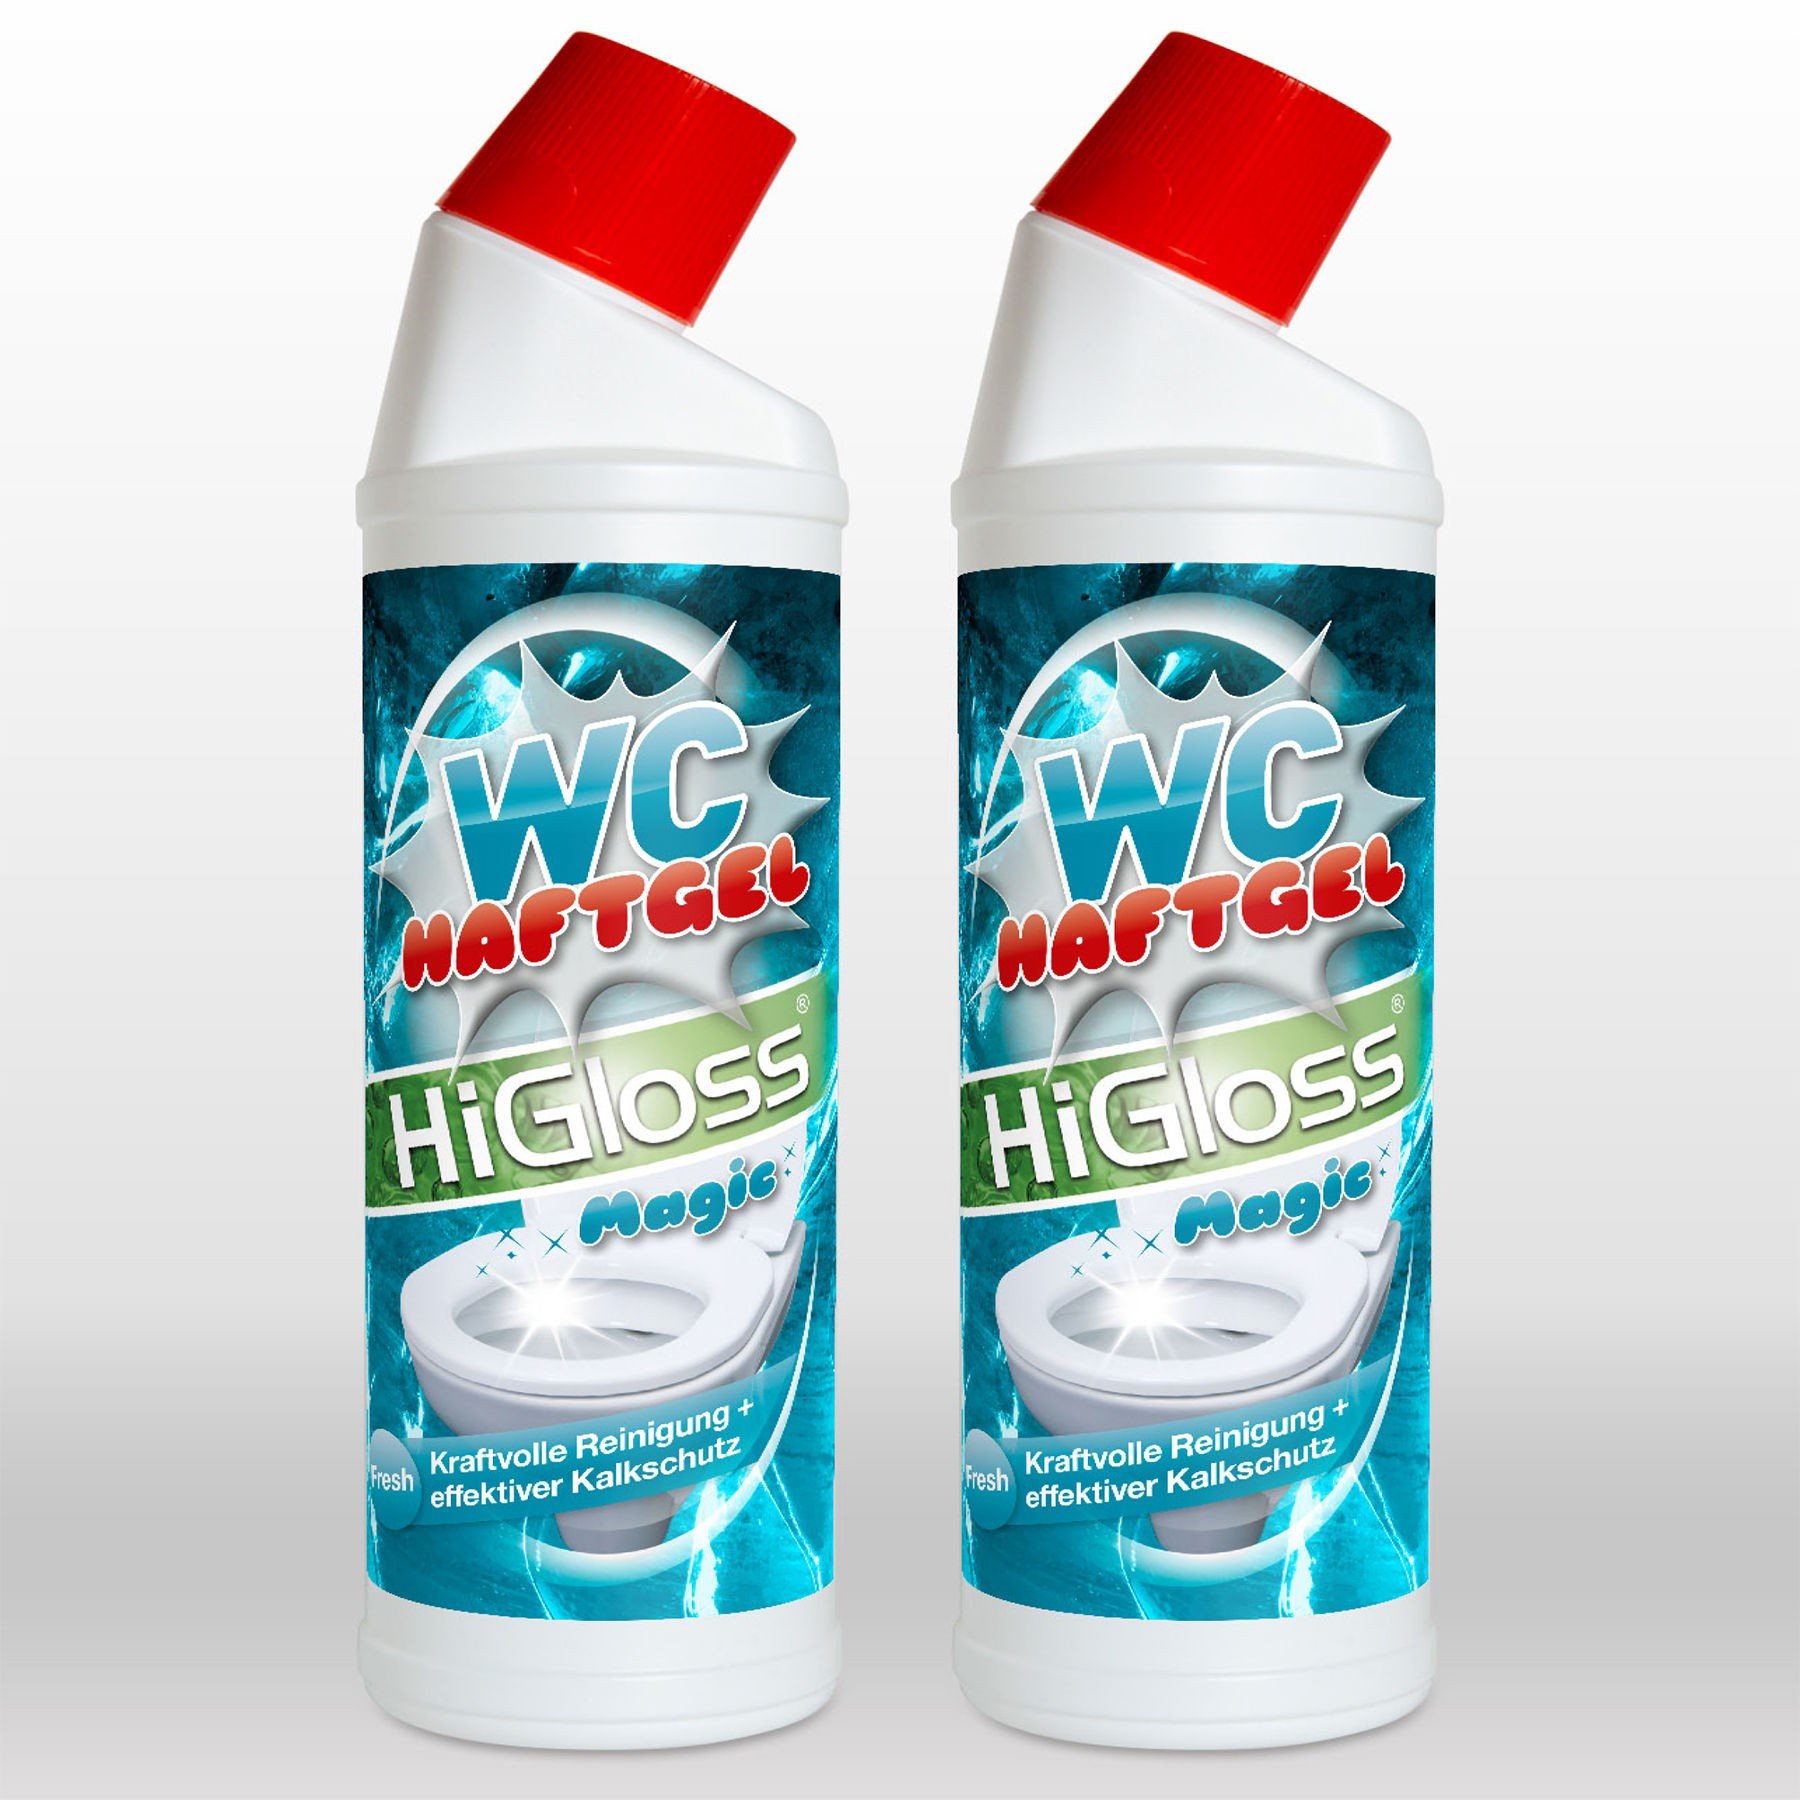 WC-Haftreiniger-Gel, 2 x 750 ml - Produkte - HiGloss - Marken